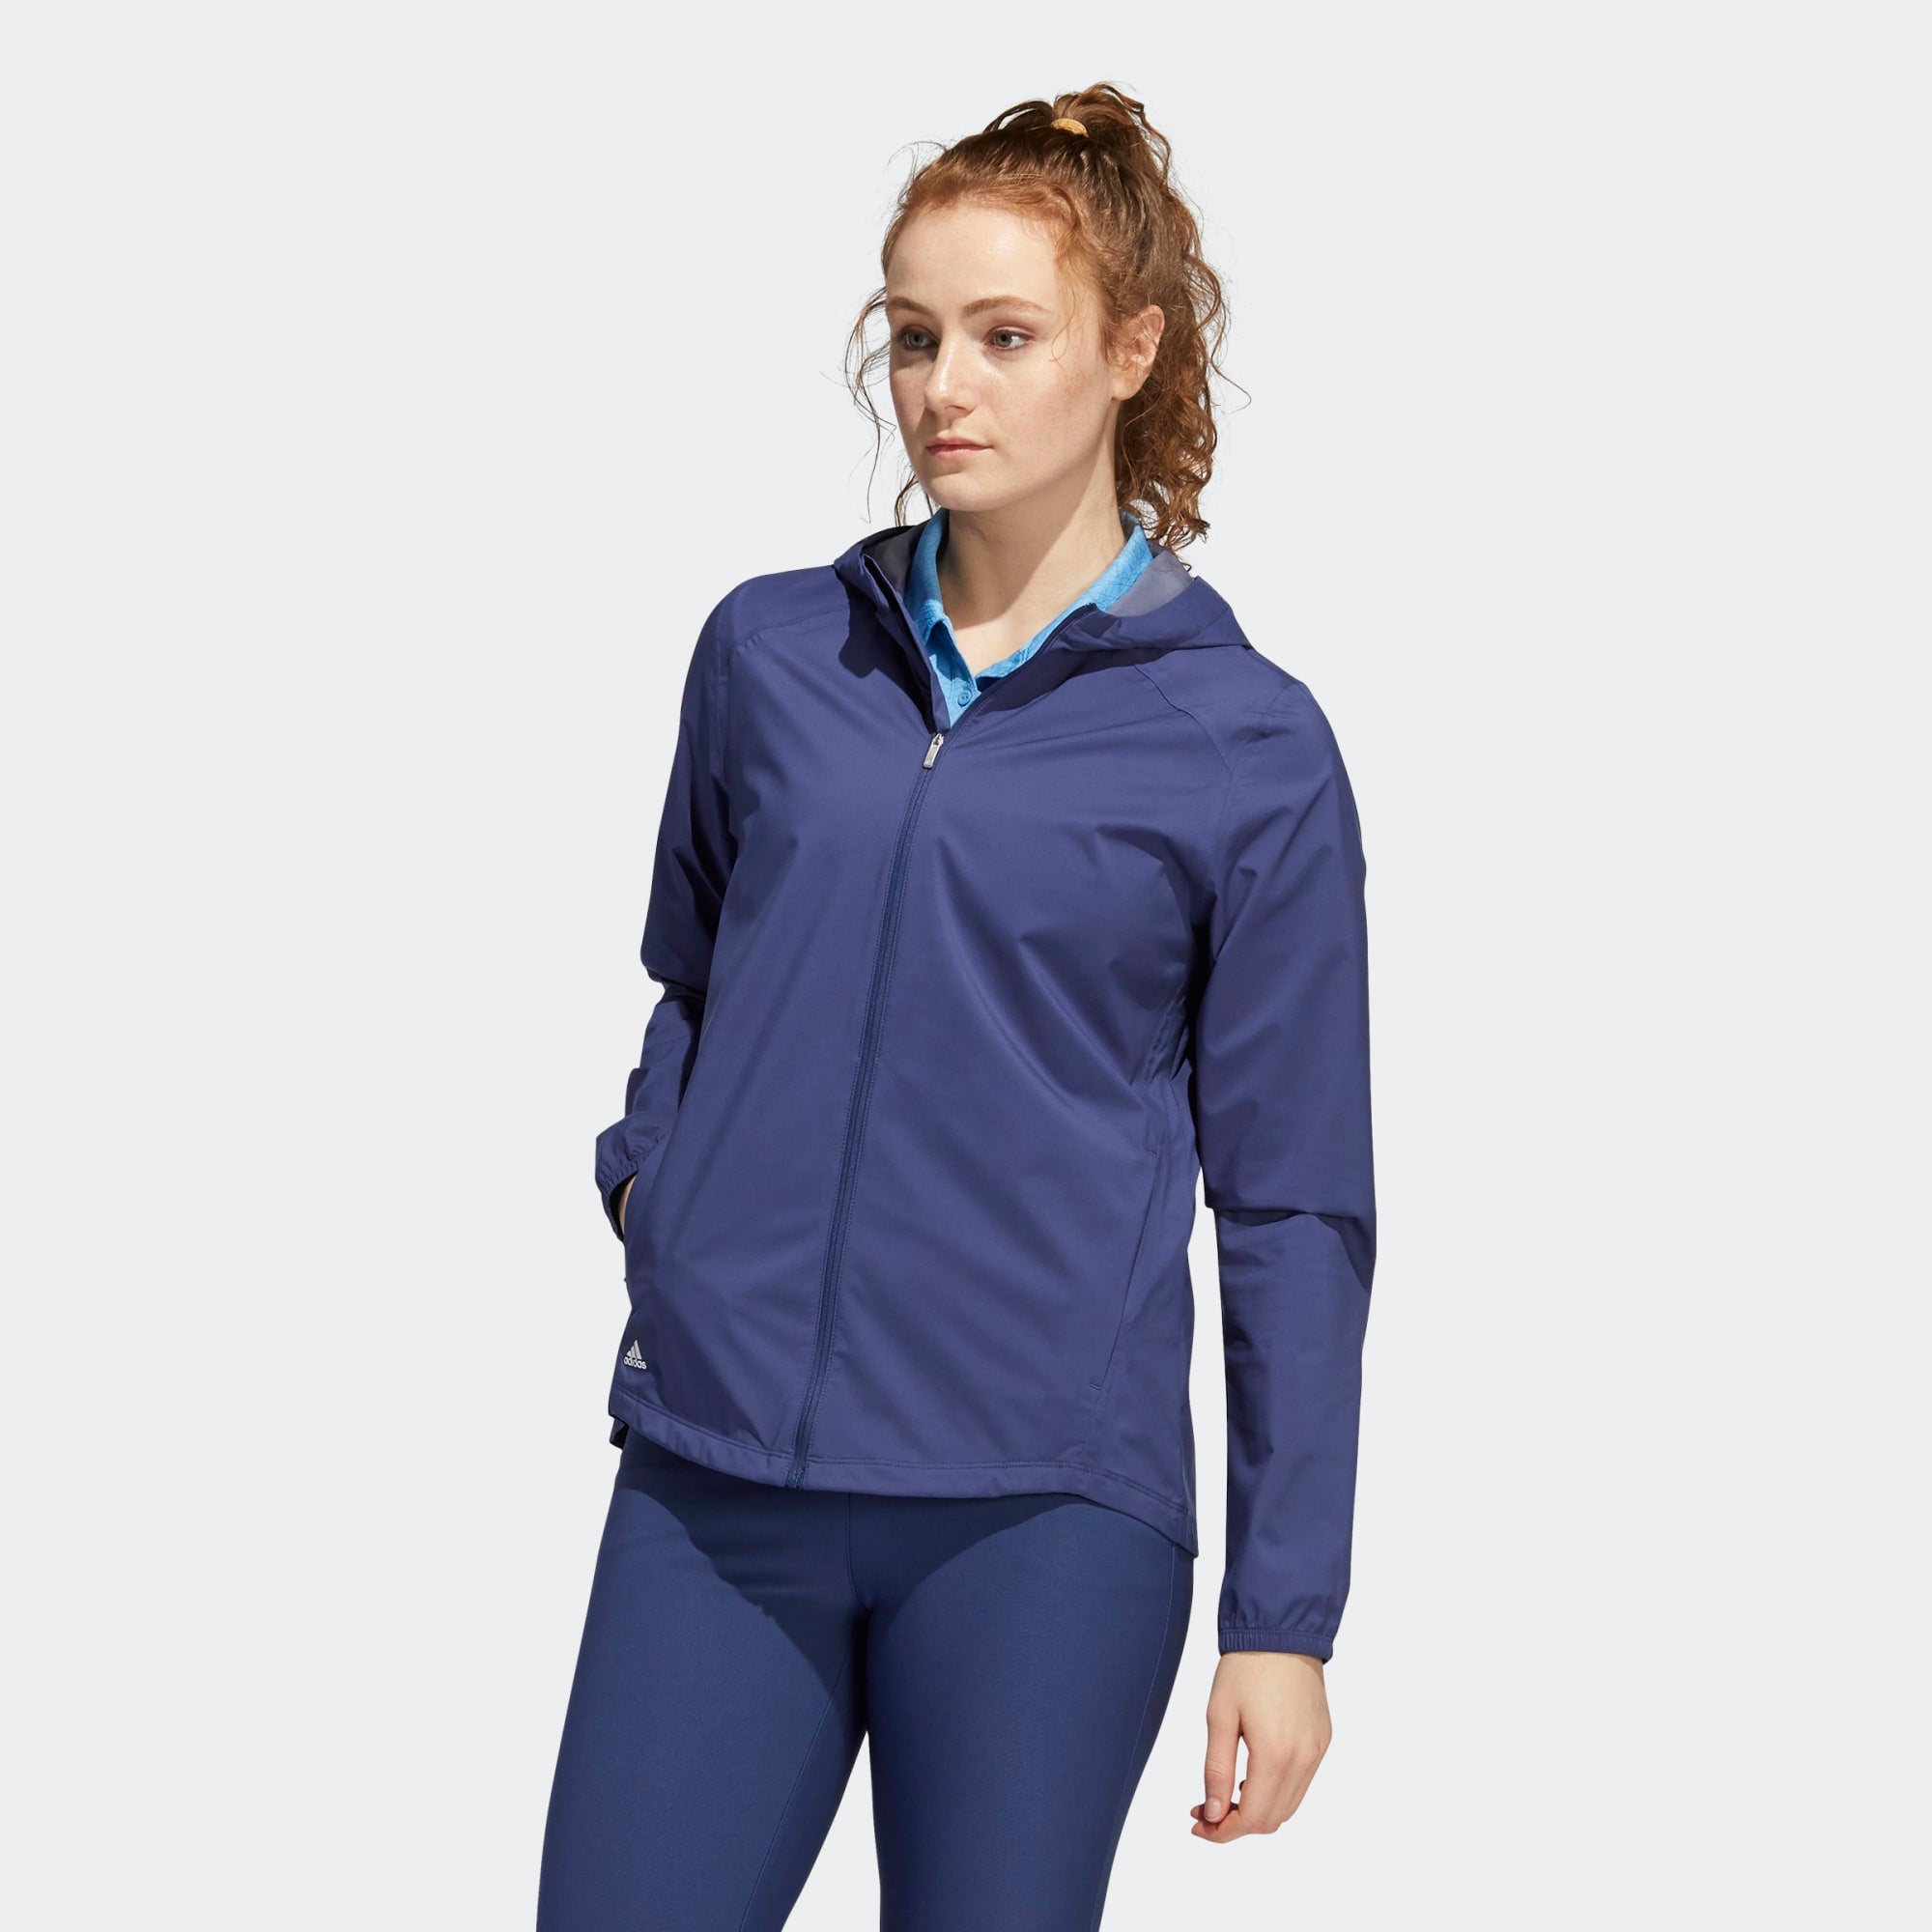 Adidas Womens Provisional Jacket - Navy